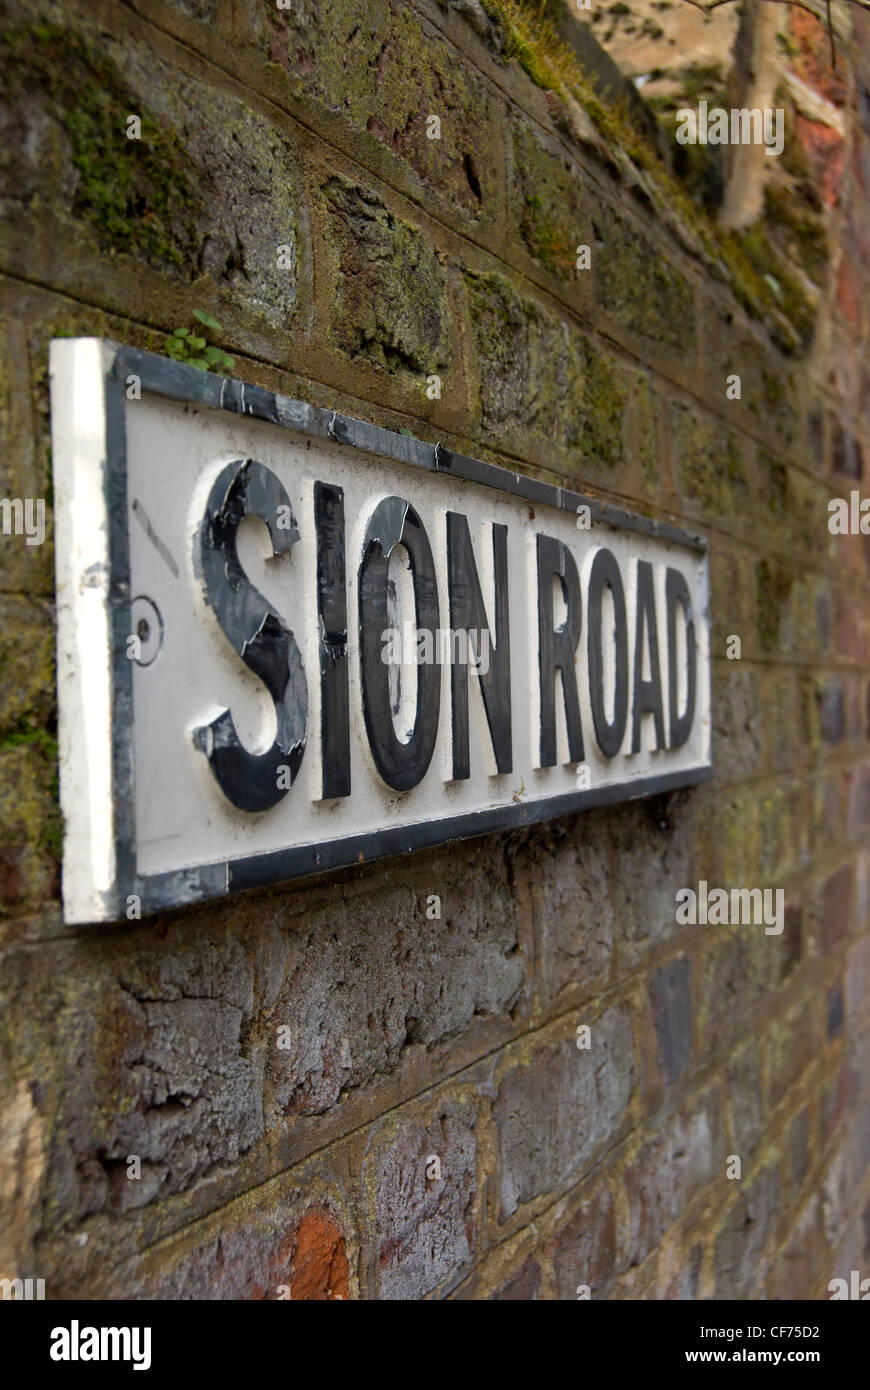 Nombre de calle para sion road, Twickenham, Middlesex, Inglaterra Foto de stock